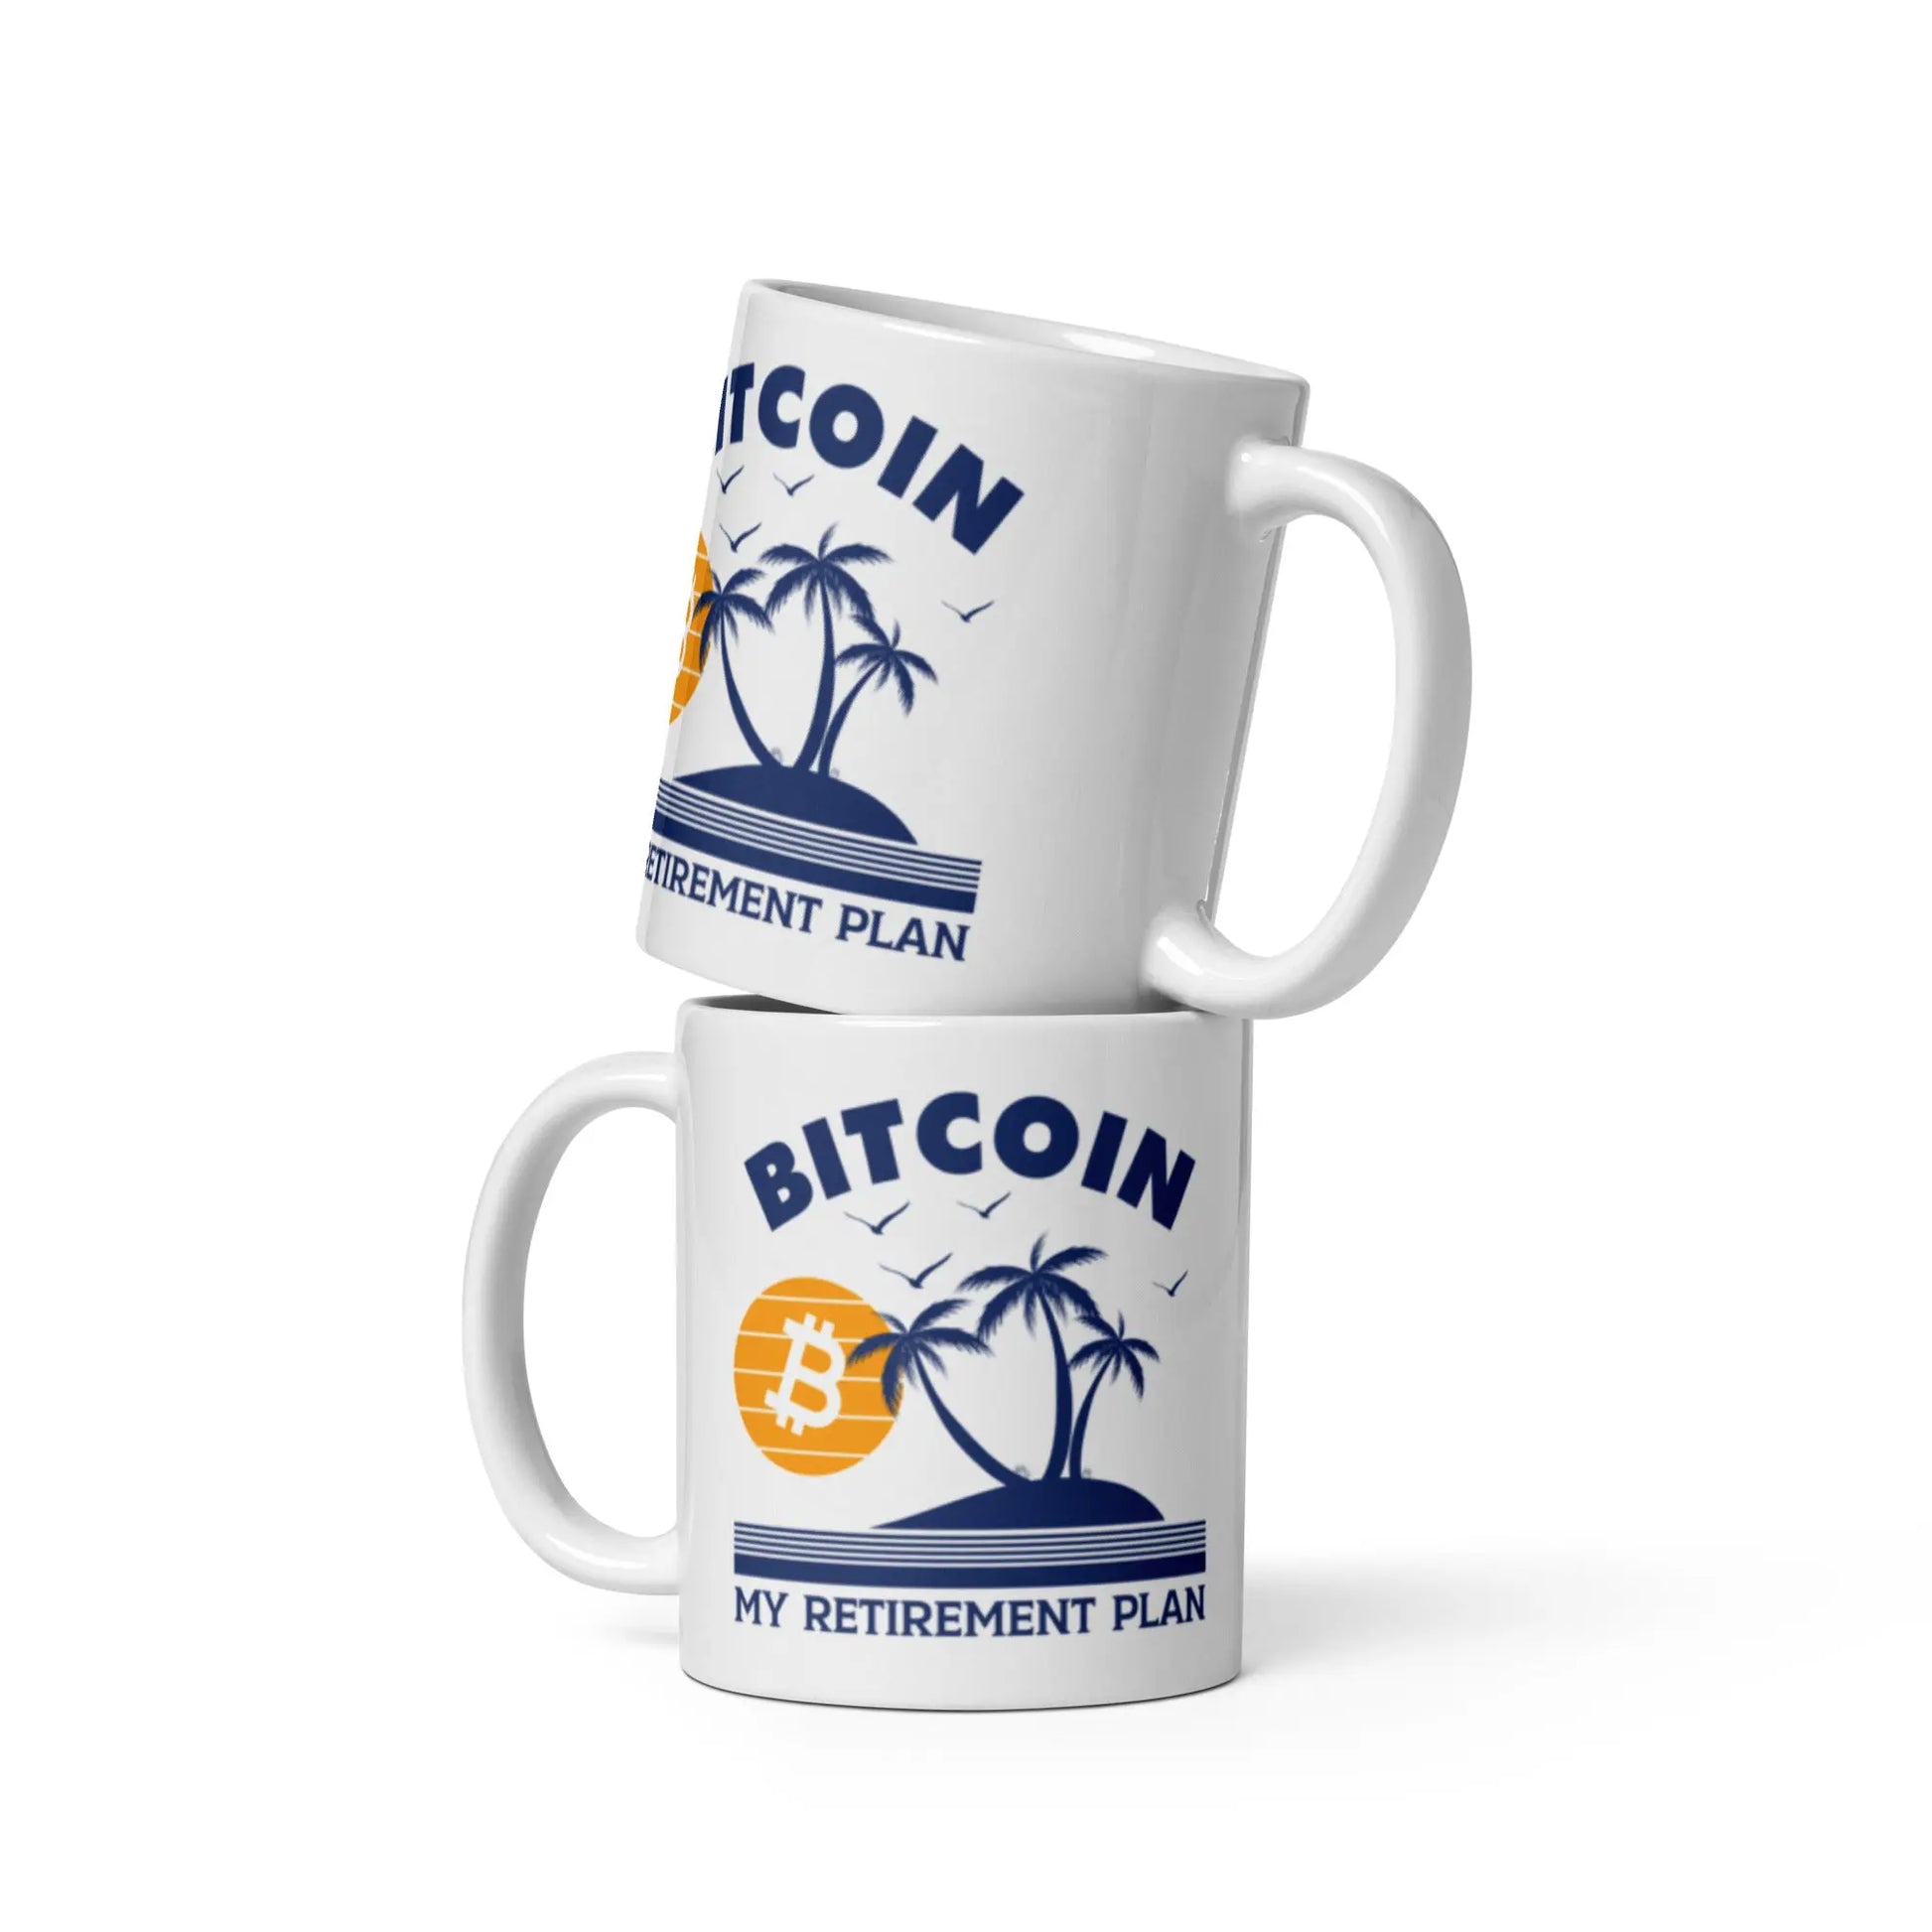 My Retirement Plan - Glossy Bitcoin Mug Store of Value